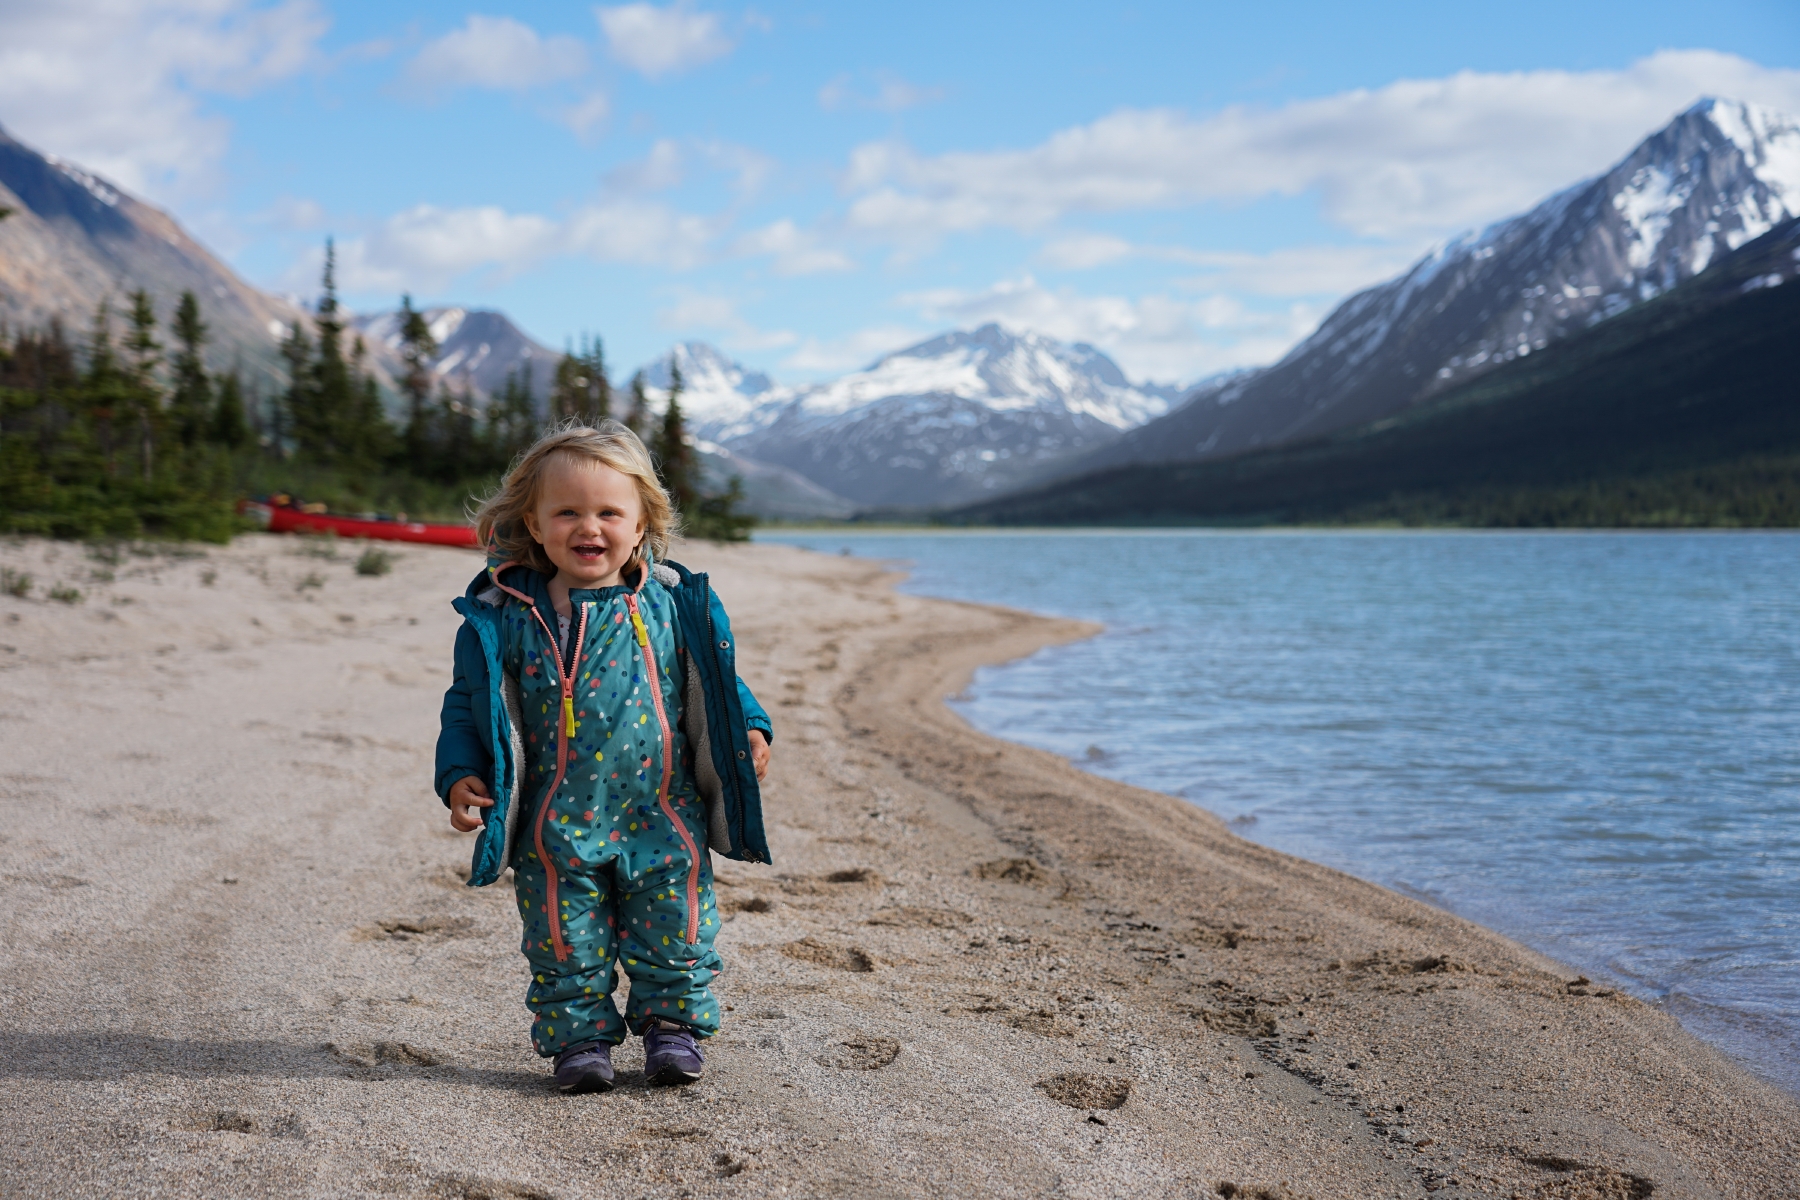 Family-friendly hikes in the Yukon, Travel Yukon - Yukon, Canada